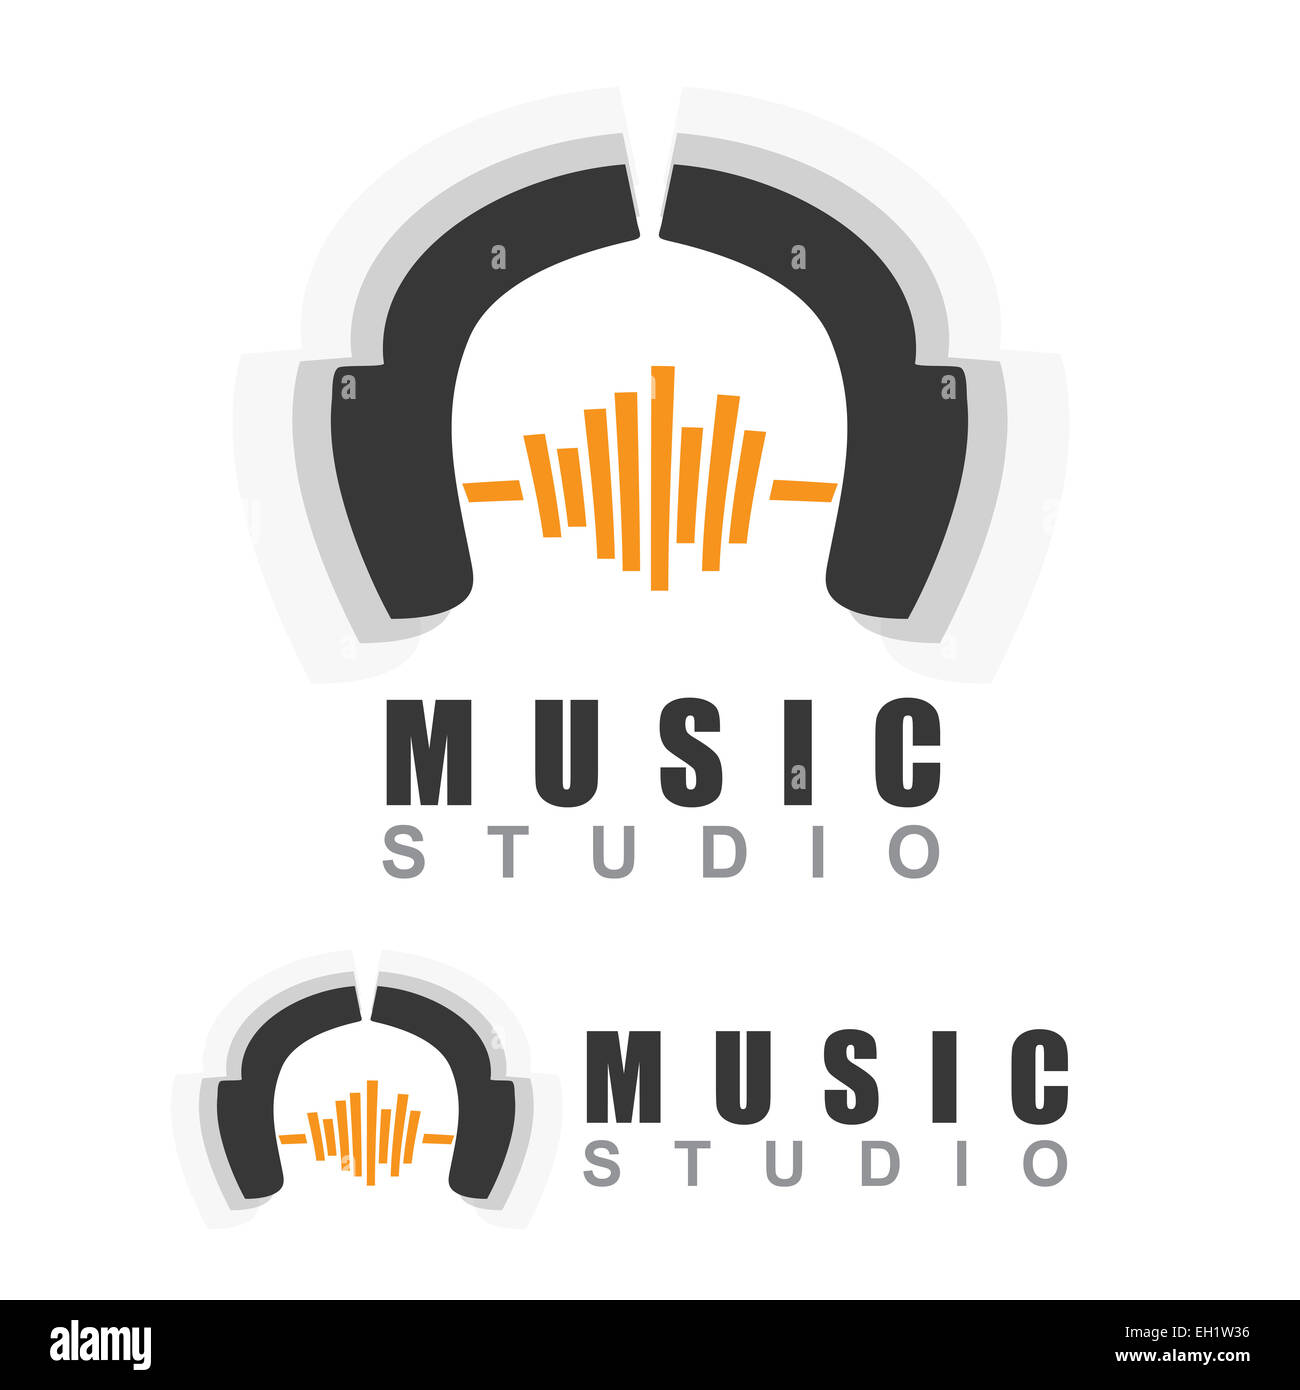 Headphones vector icon for a music studio Stock Photo